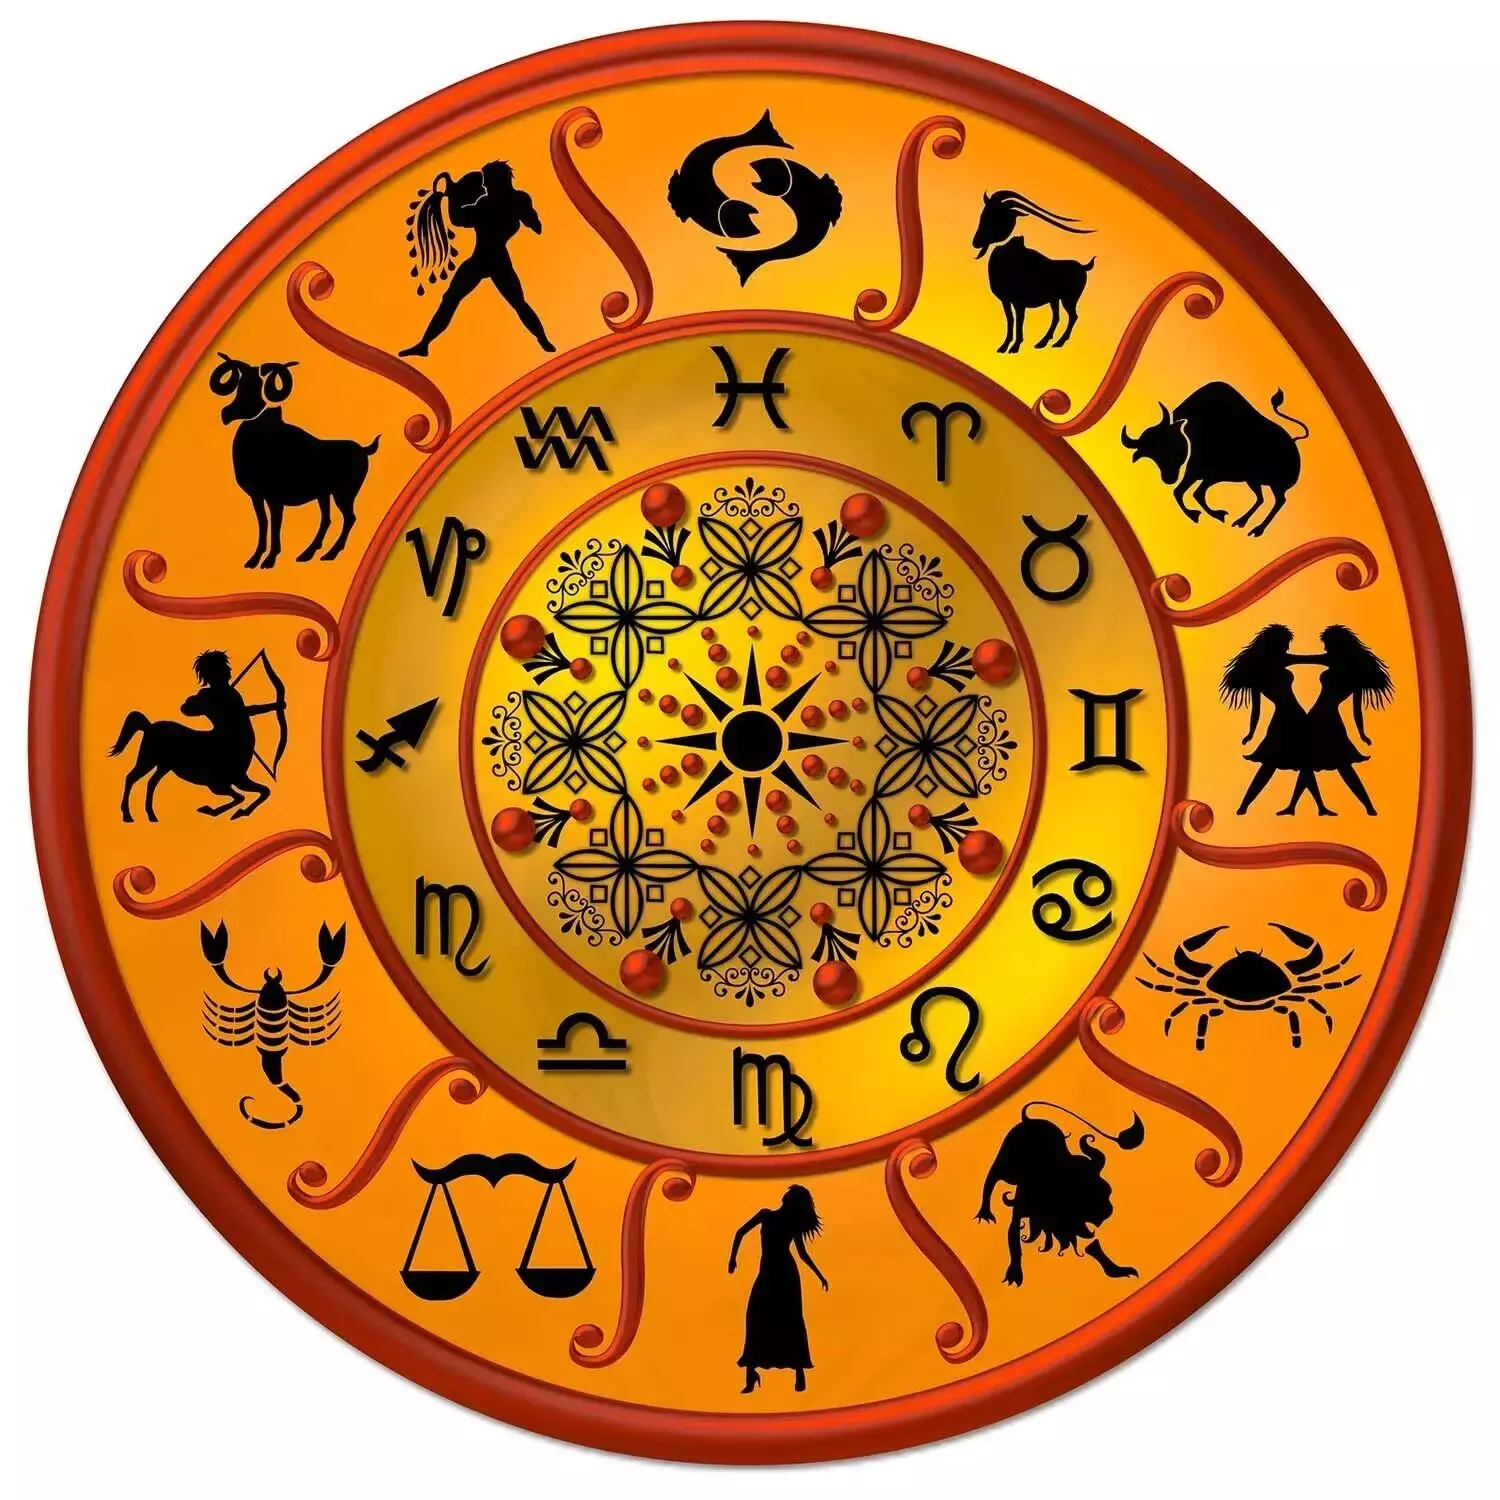 19  Novembar  – Know your todays horoscope